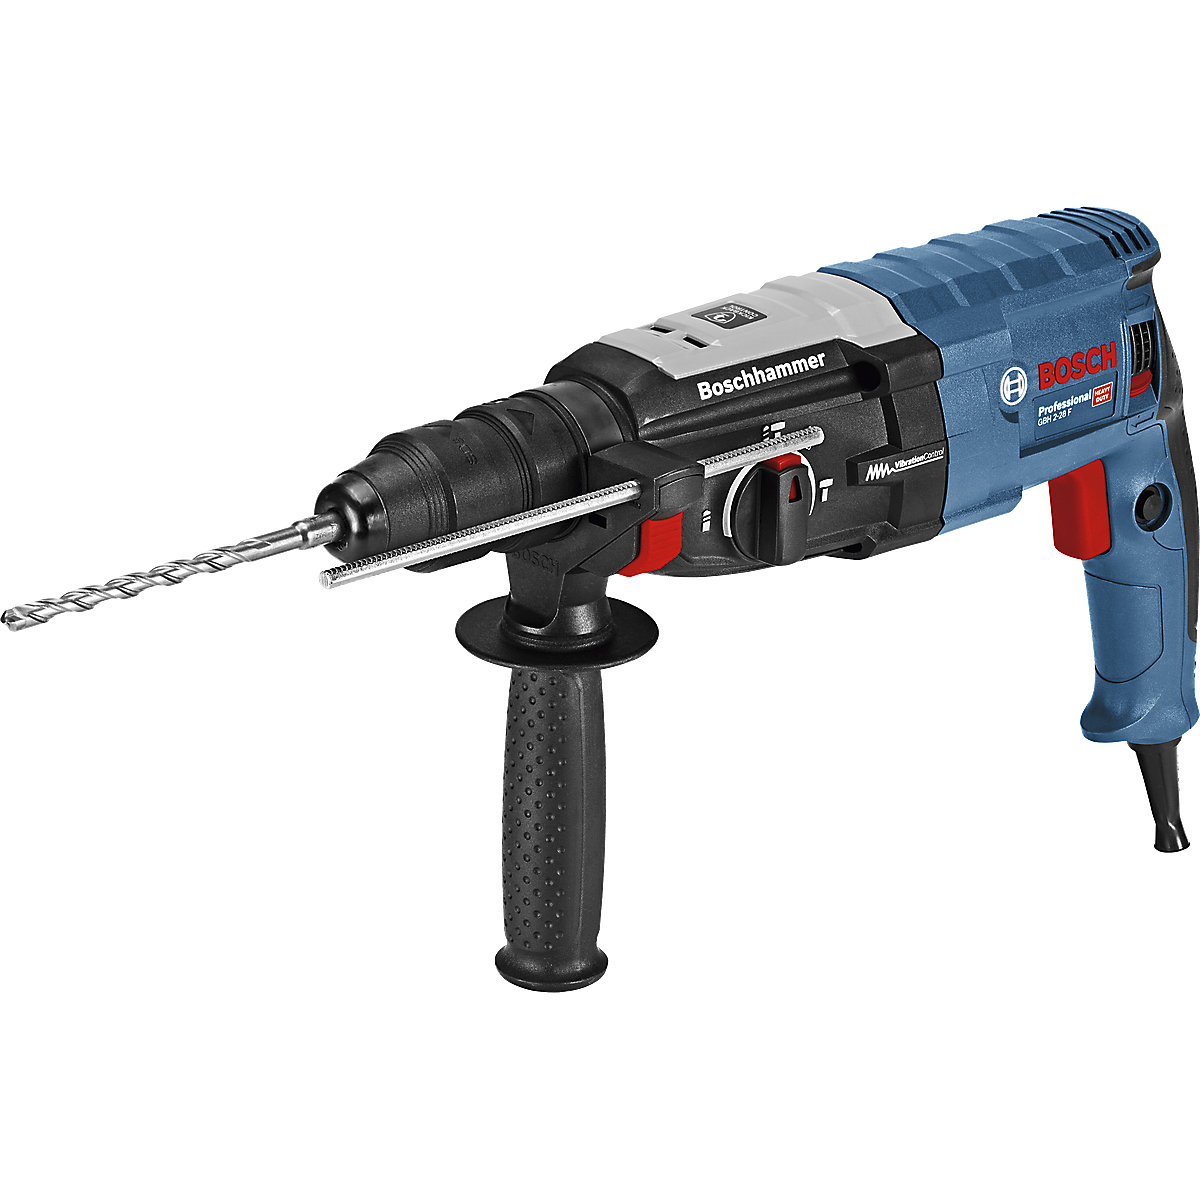 GBH 2-28 F SDS plus Professional hammer drill - Bosch